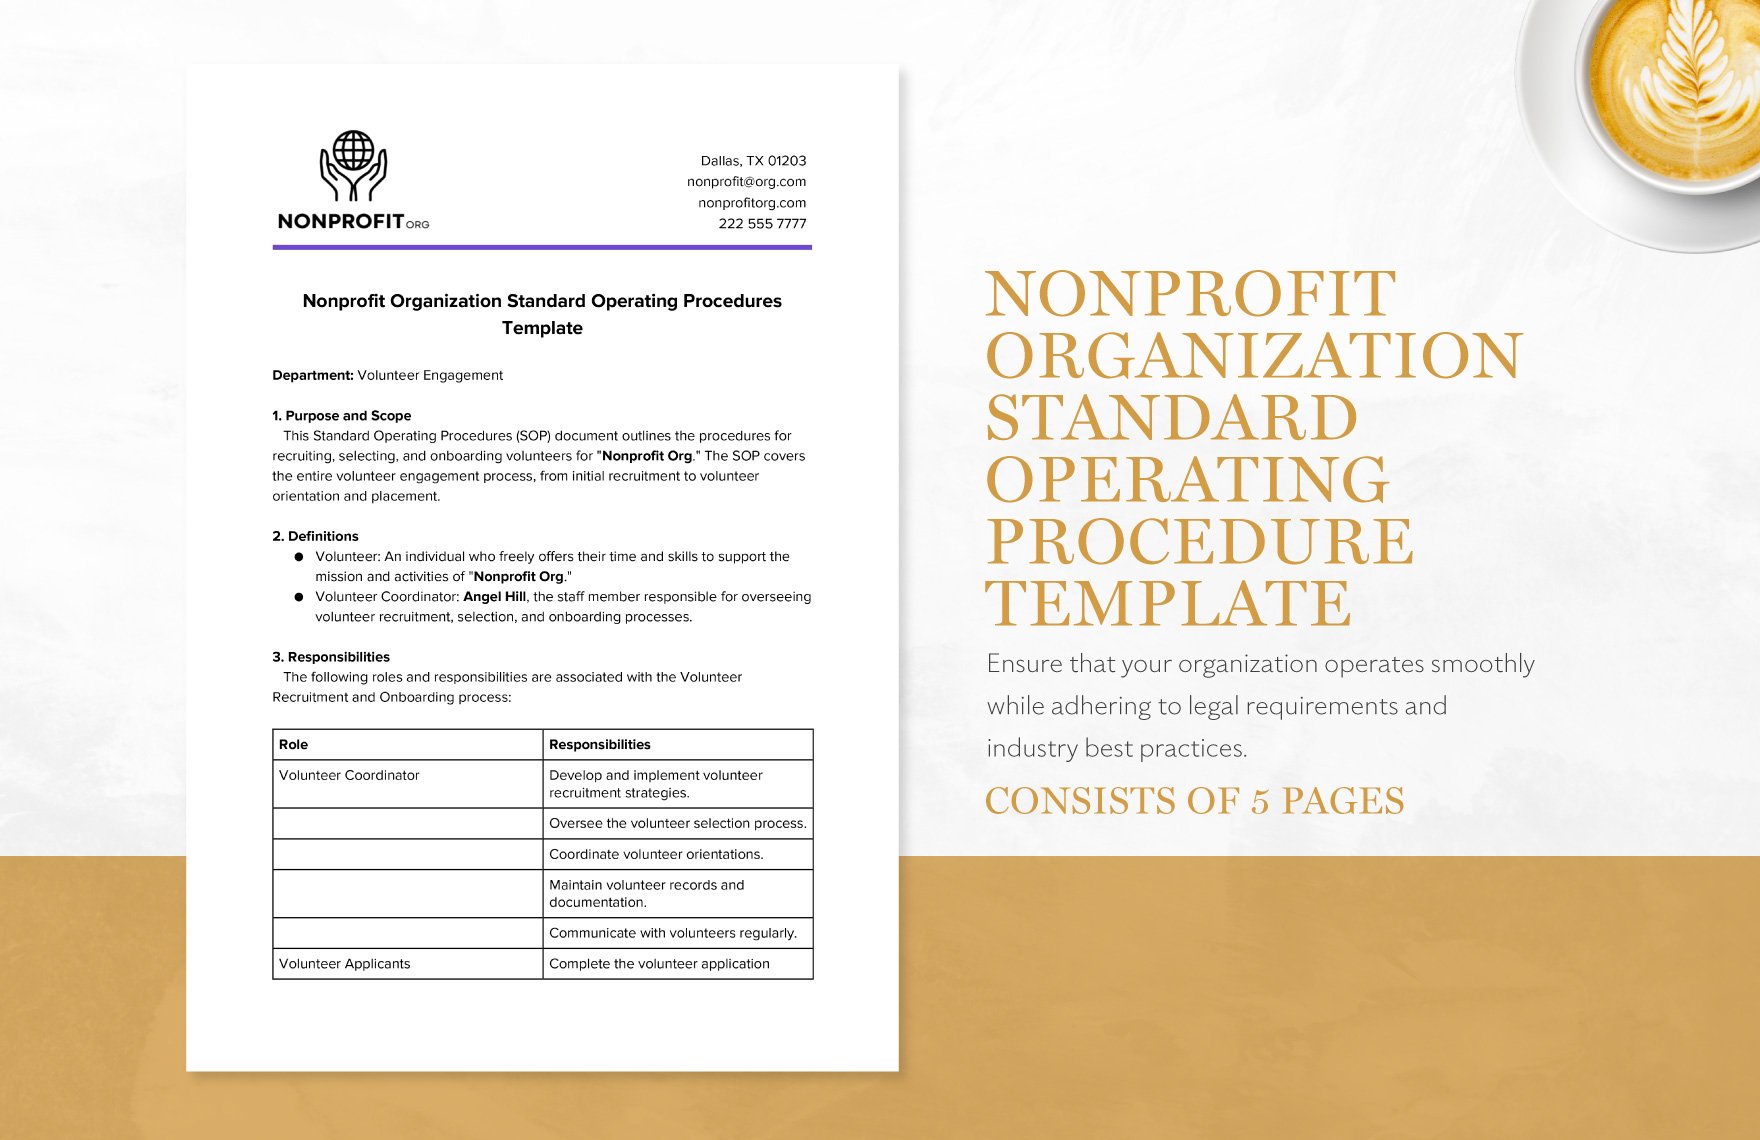 Nonprofit Organization Standard Operating Procedures Template in Word, Google Docs, PDF